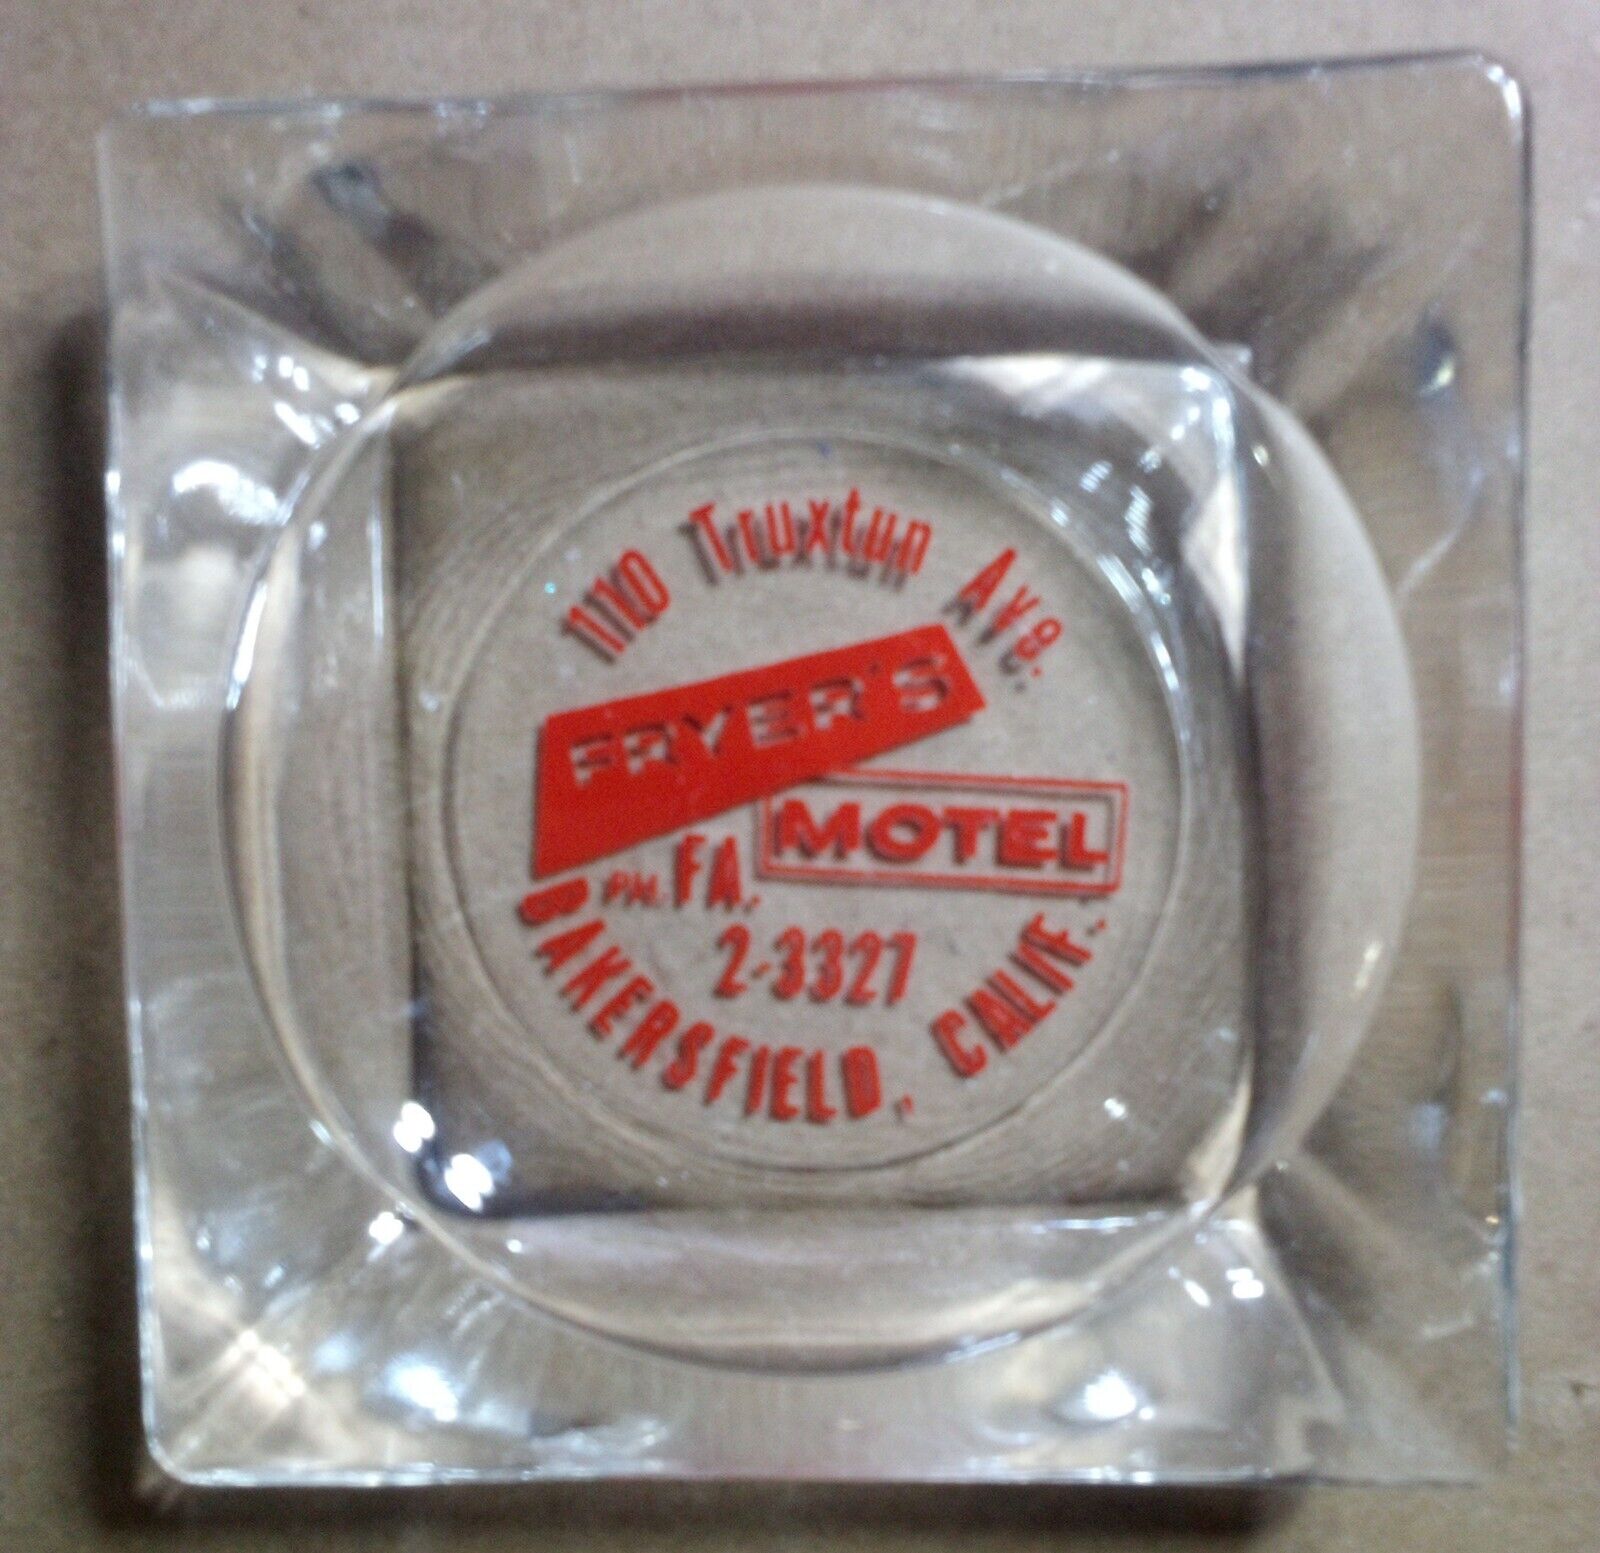 Fryers Motel Bakersfield California Vintage Ashtray